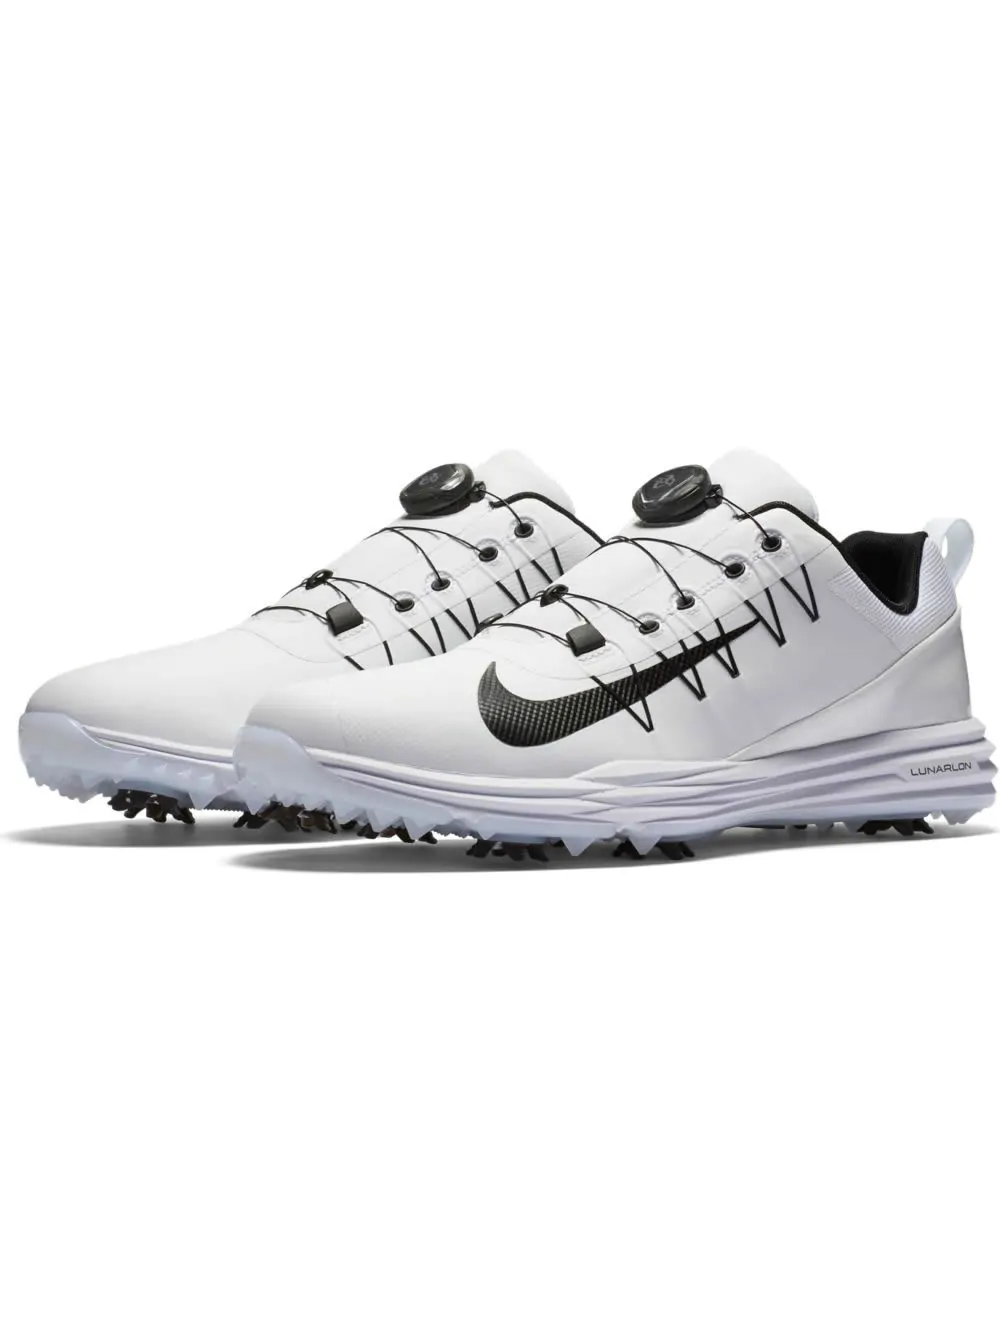 Nike Lunar BOA Golf Shoes - White/Black-White